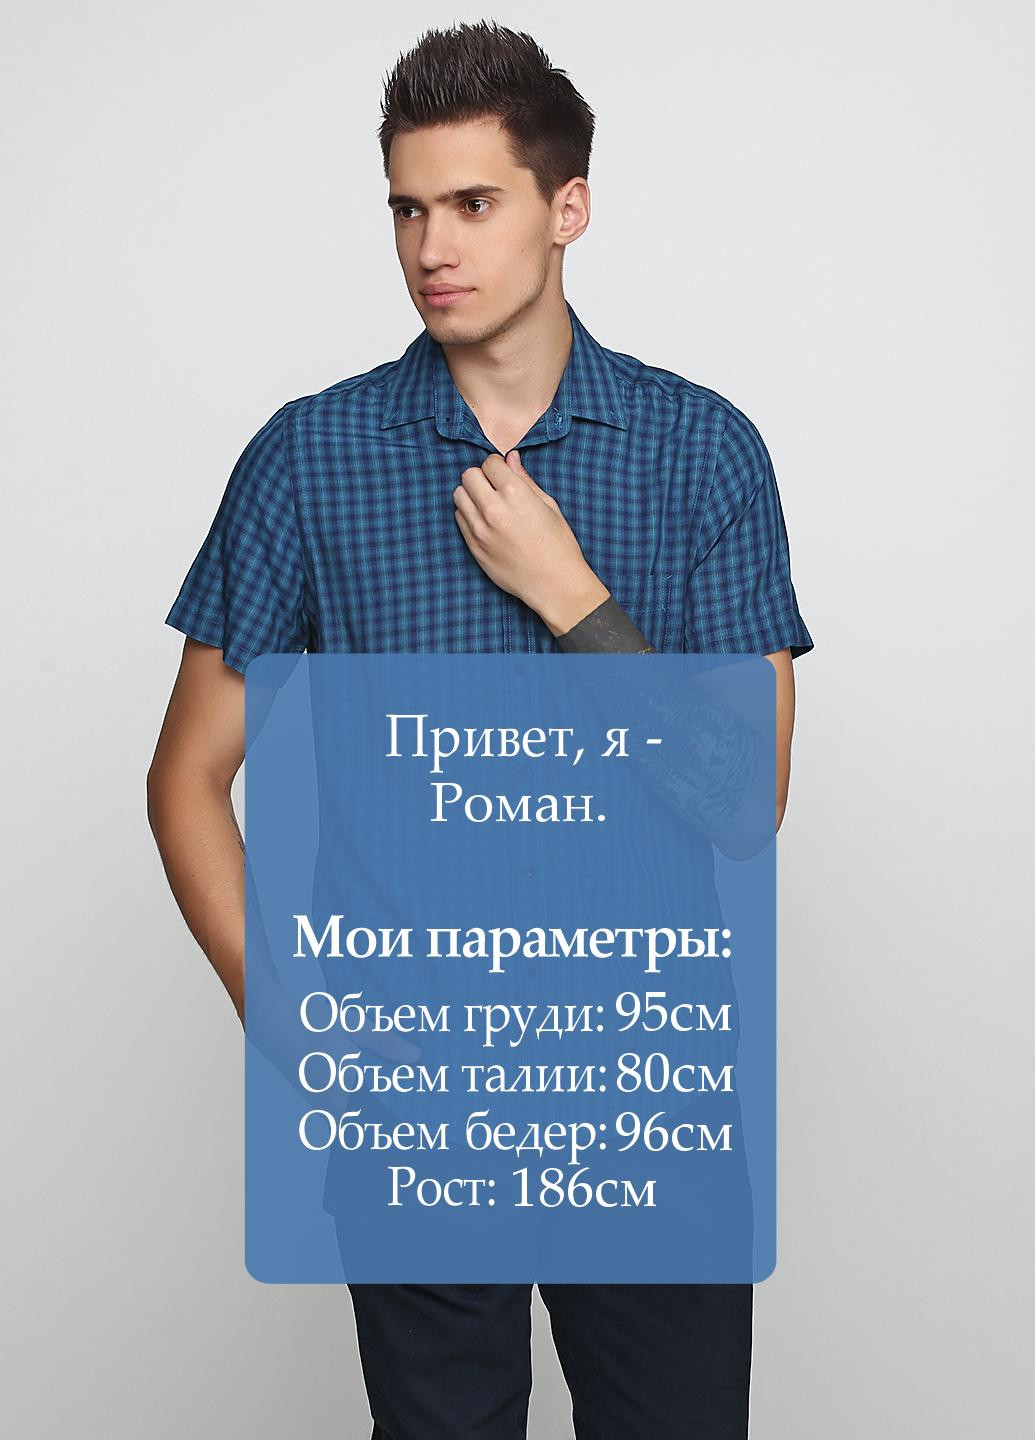 Цветная кэжуал рубашка с геометрическим узором F&F с коротким рукавом